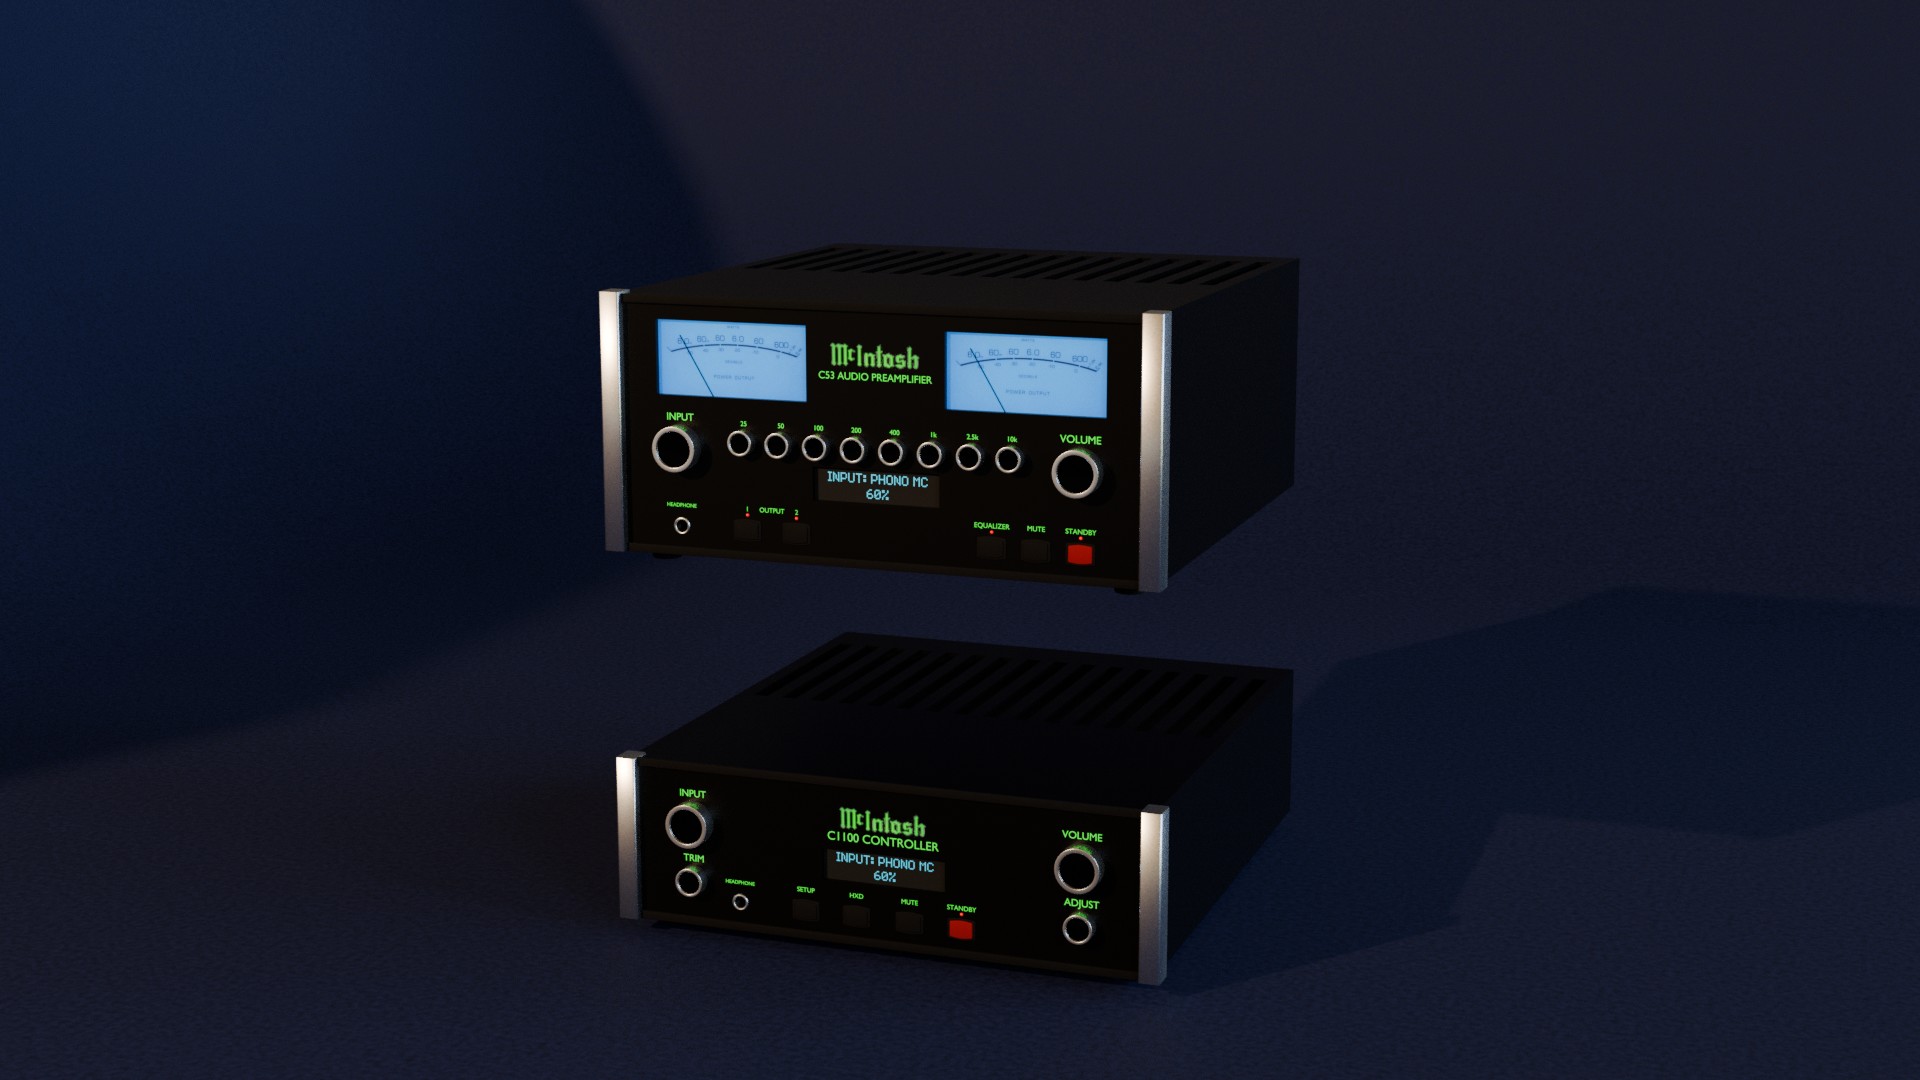 McIntosh Audio Equipment preview image 2